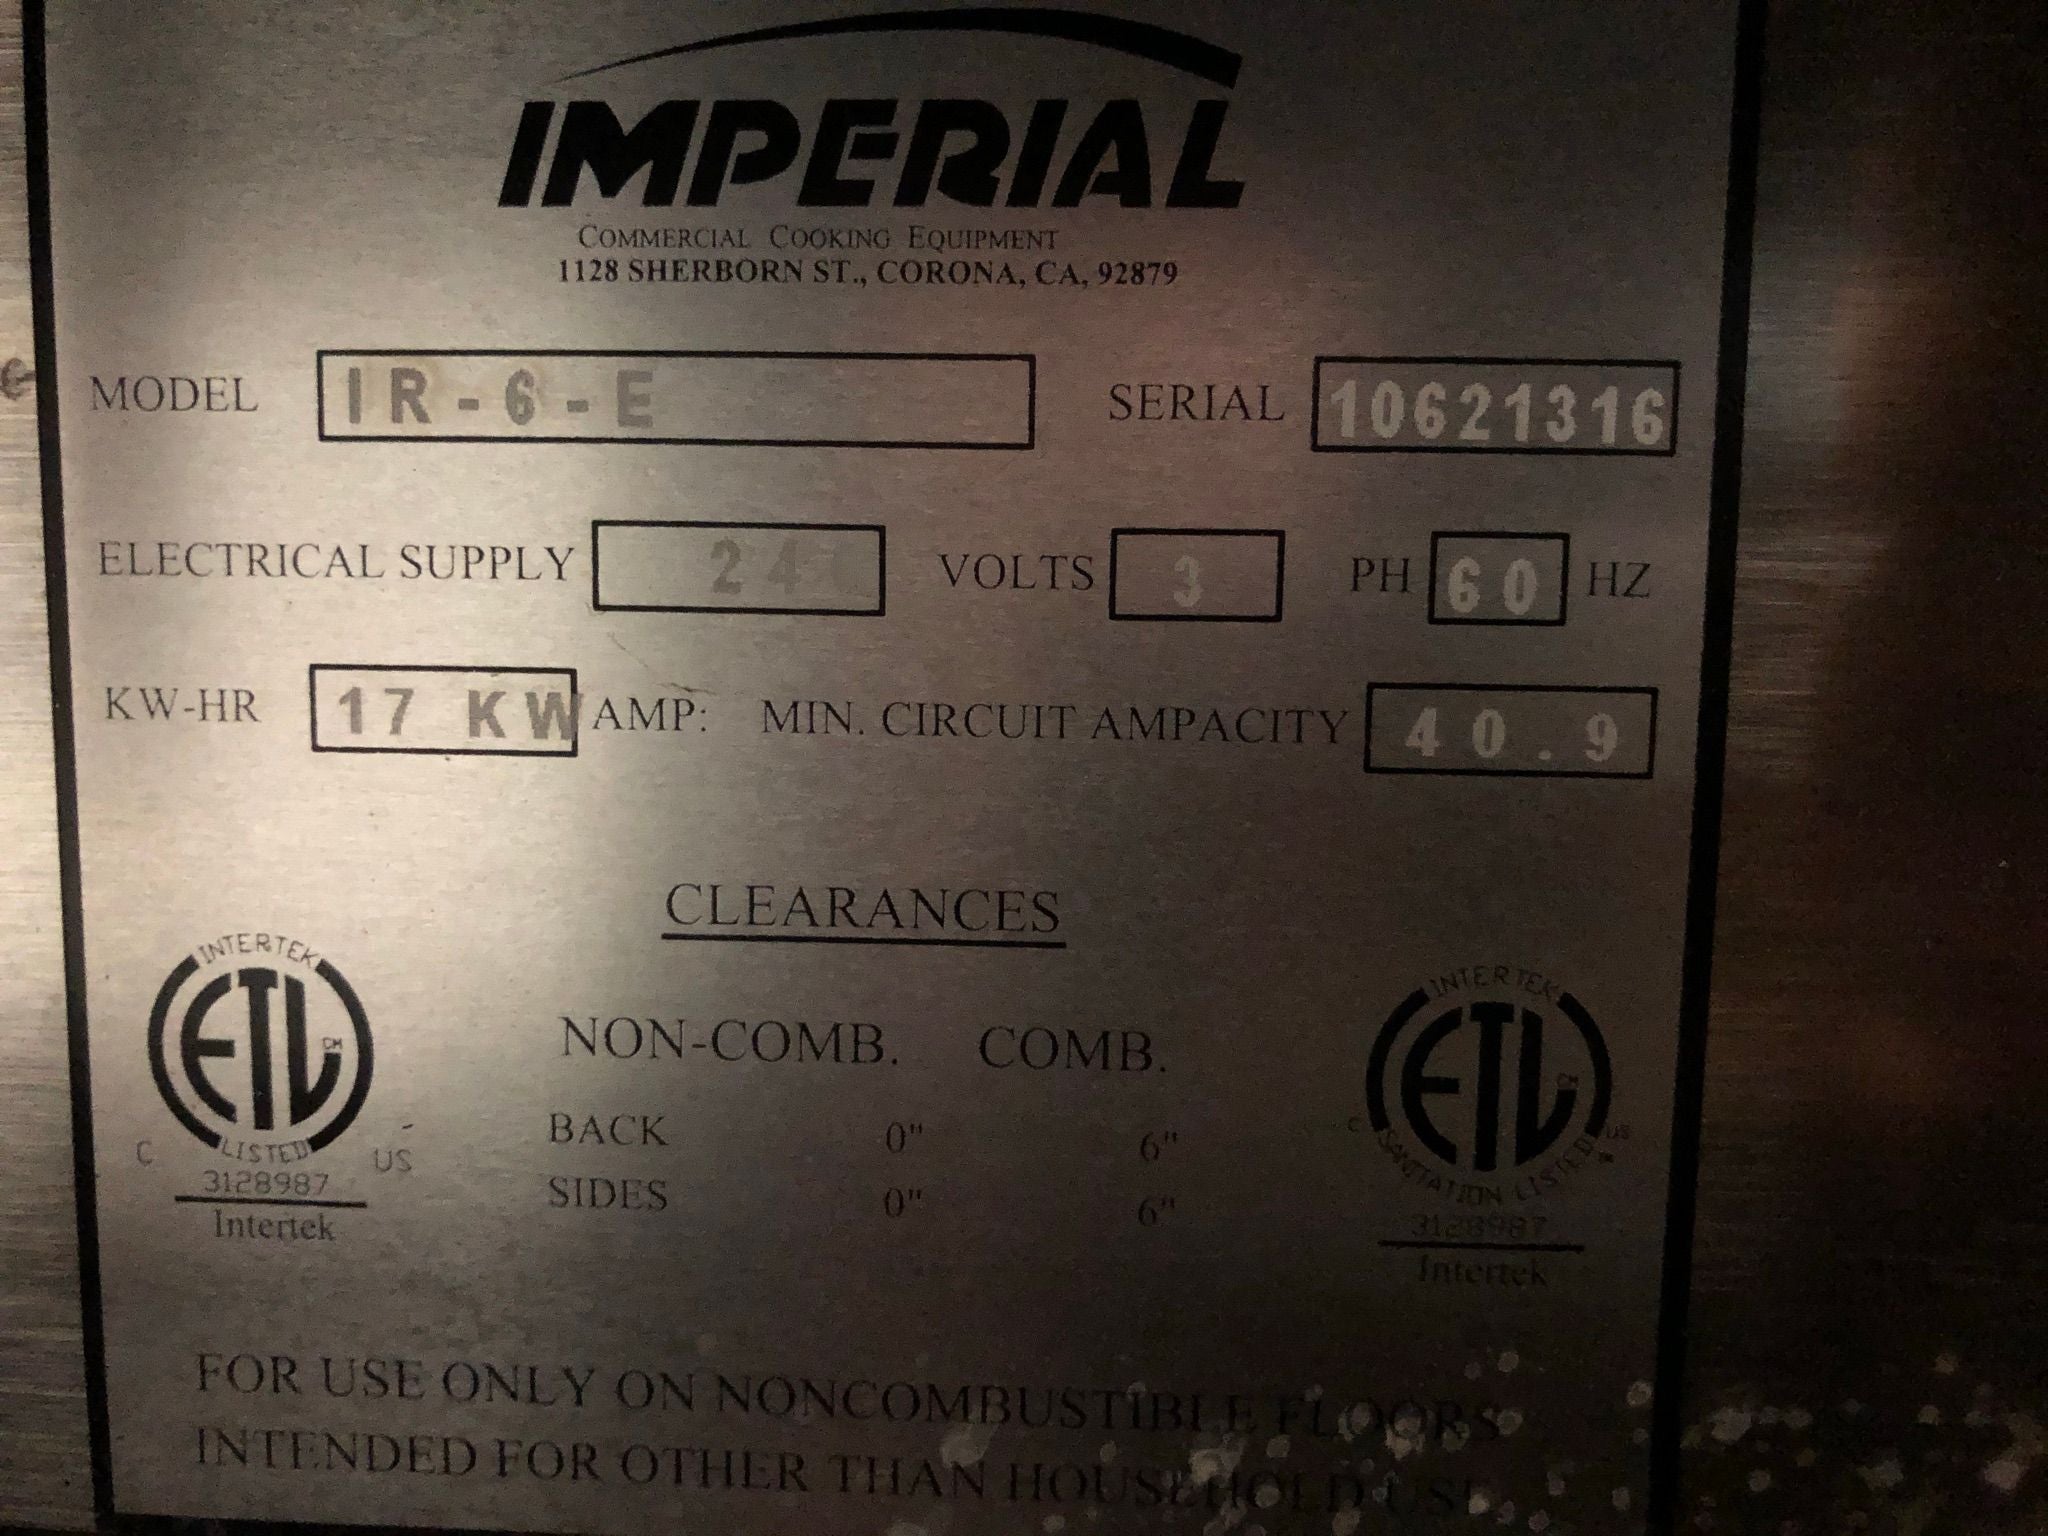 Thumbnail - Imperial IR-6-E 6 Burner Range (5)